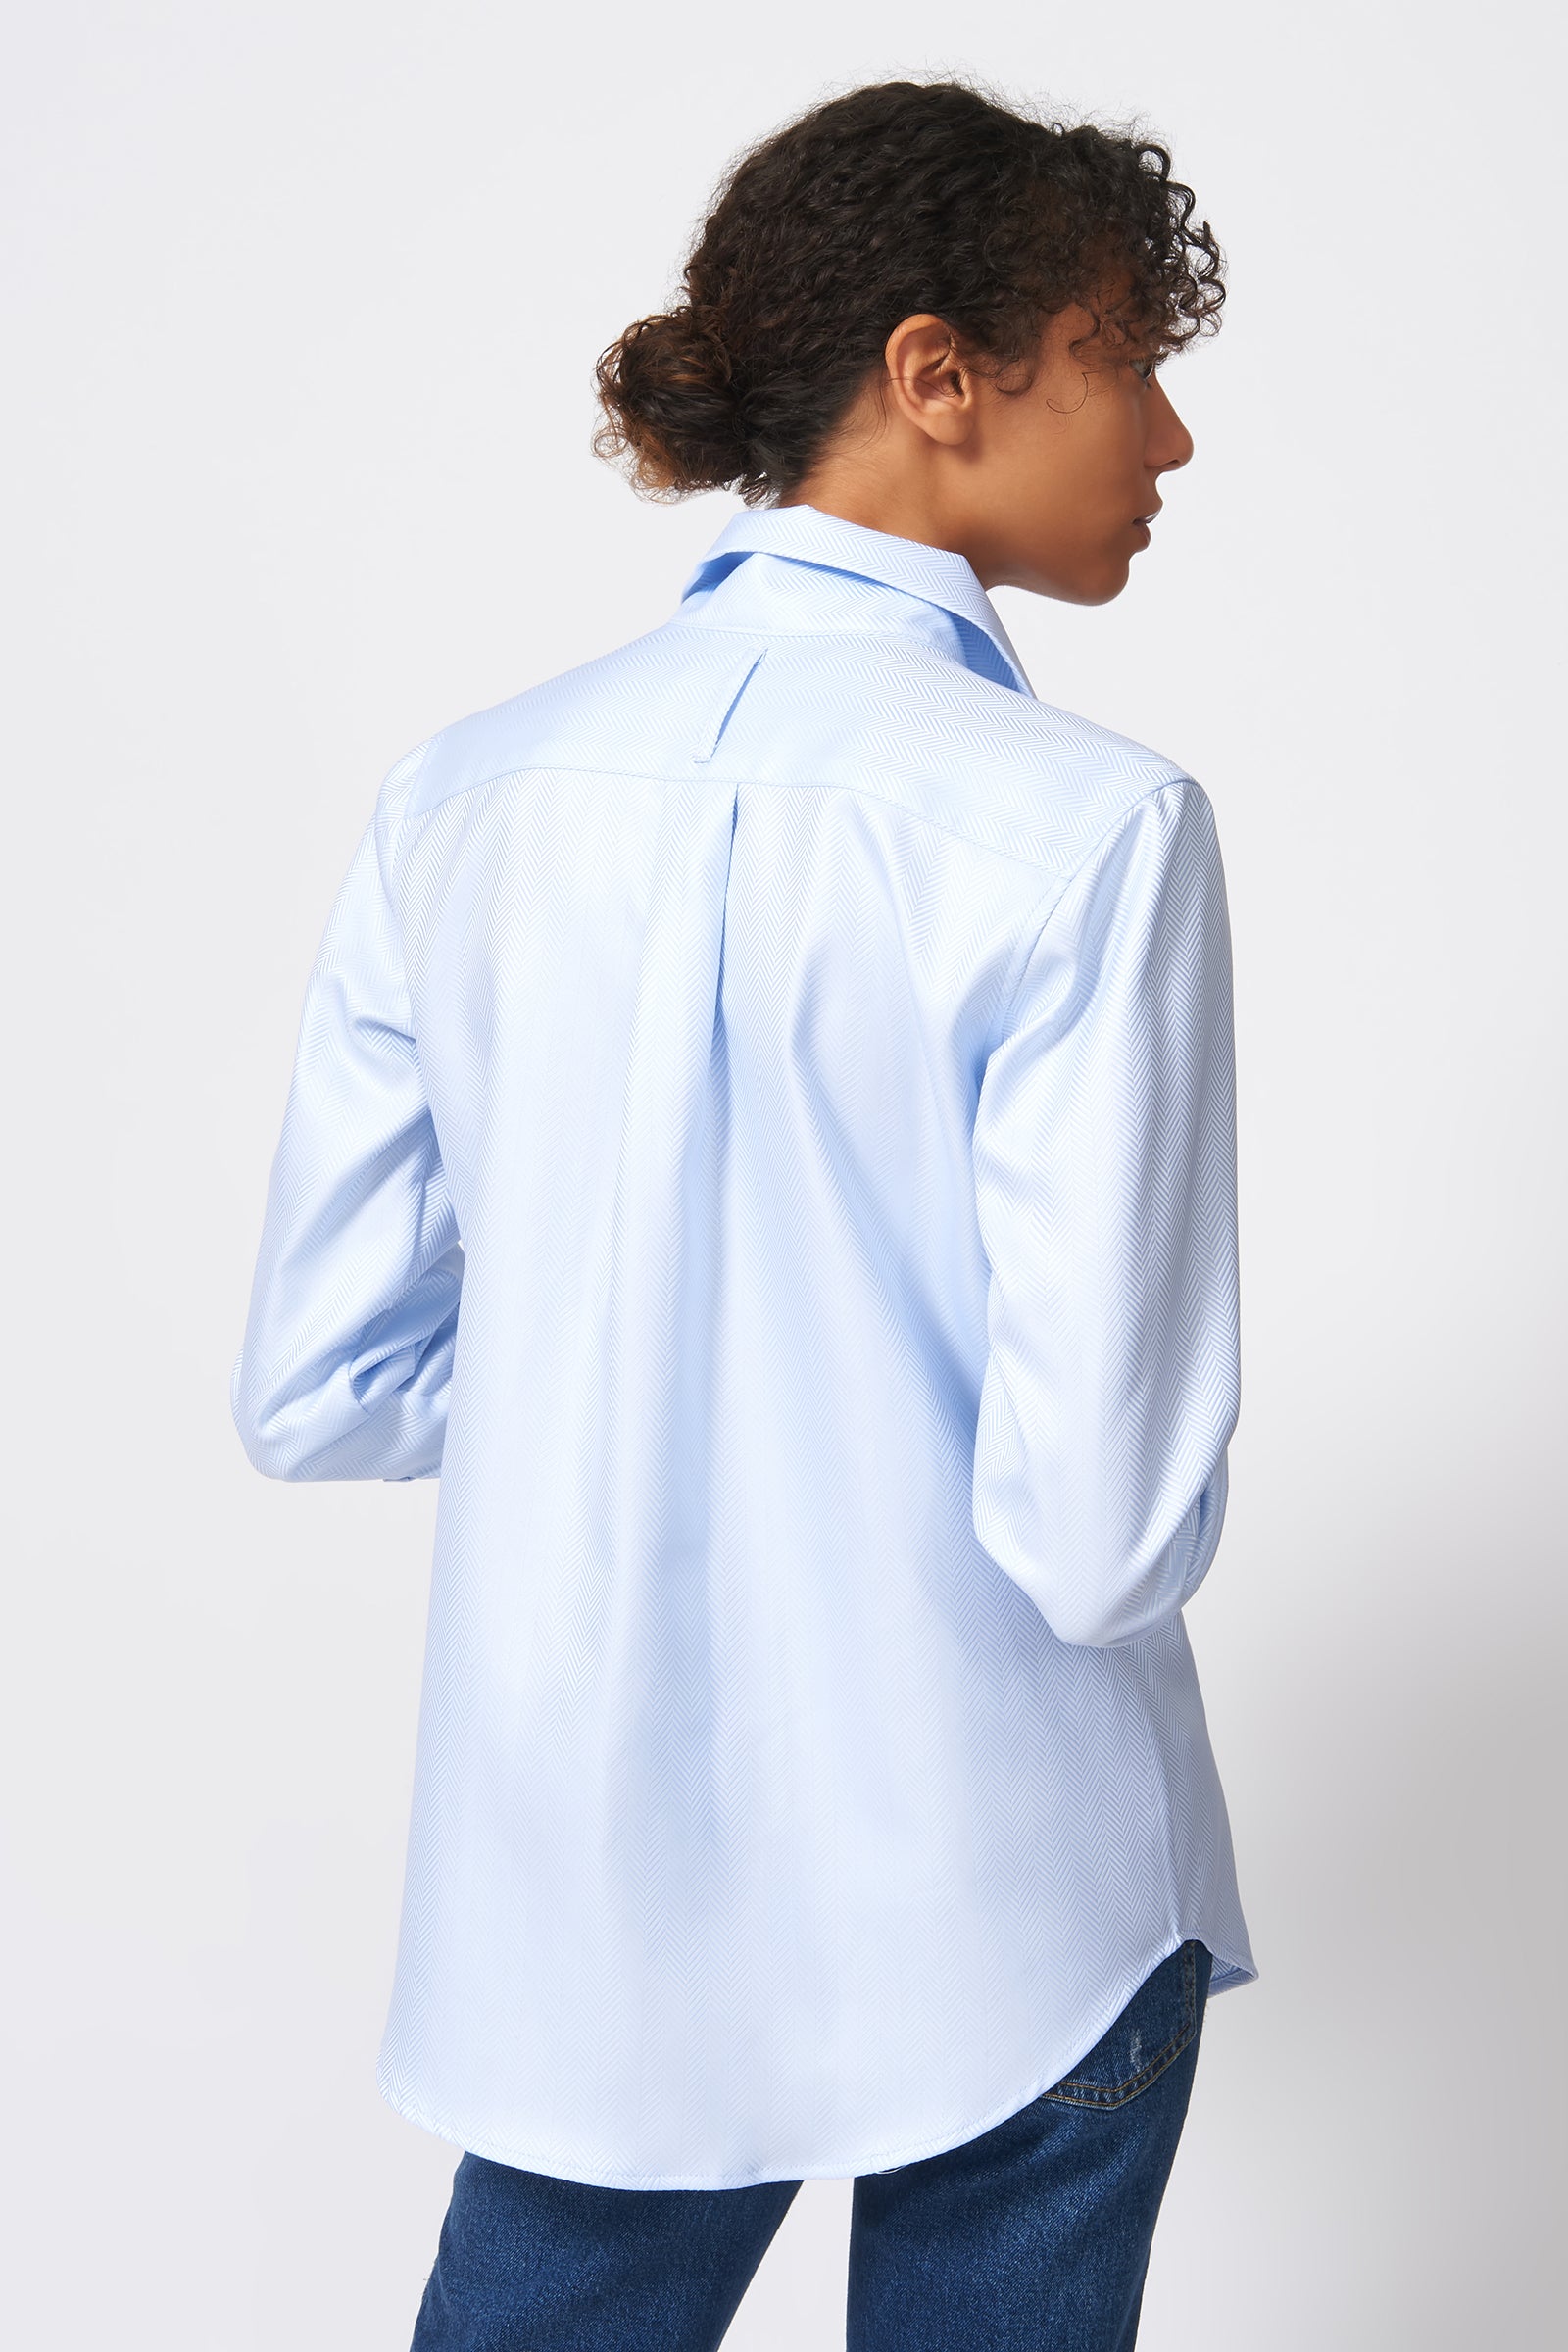 Kal Rieman Ginna Box Pleat Shirt in French Blue Herringbone on Model Back View